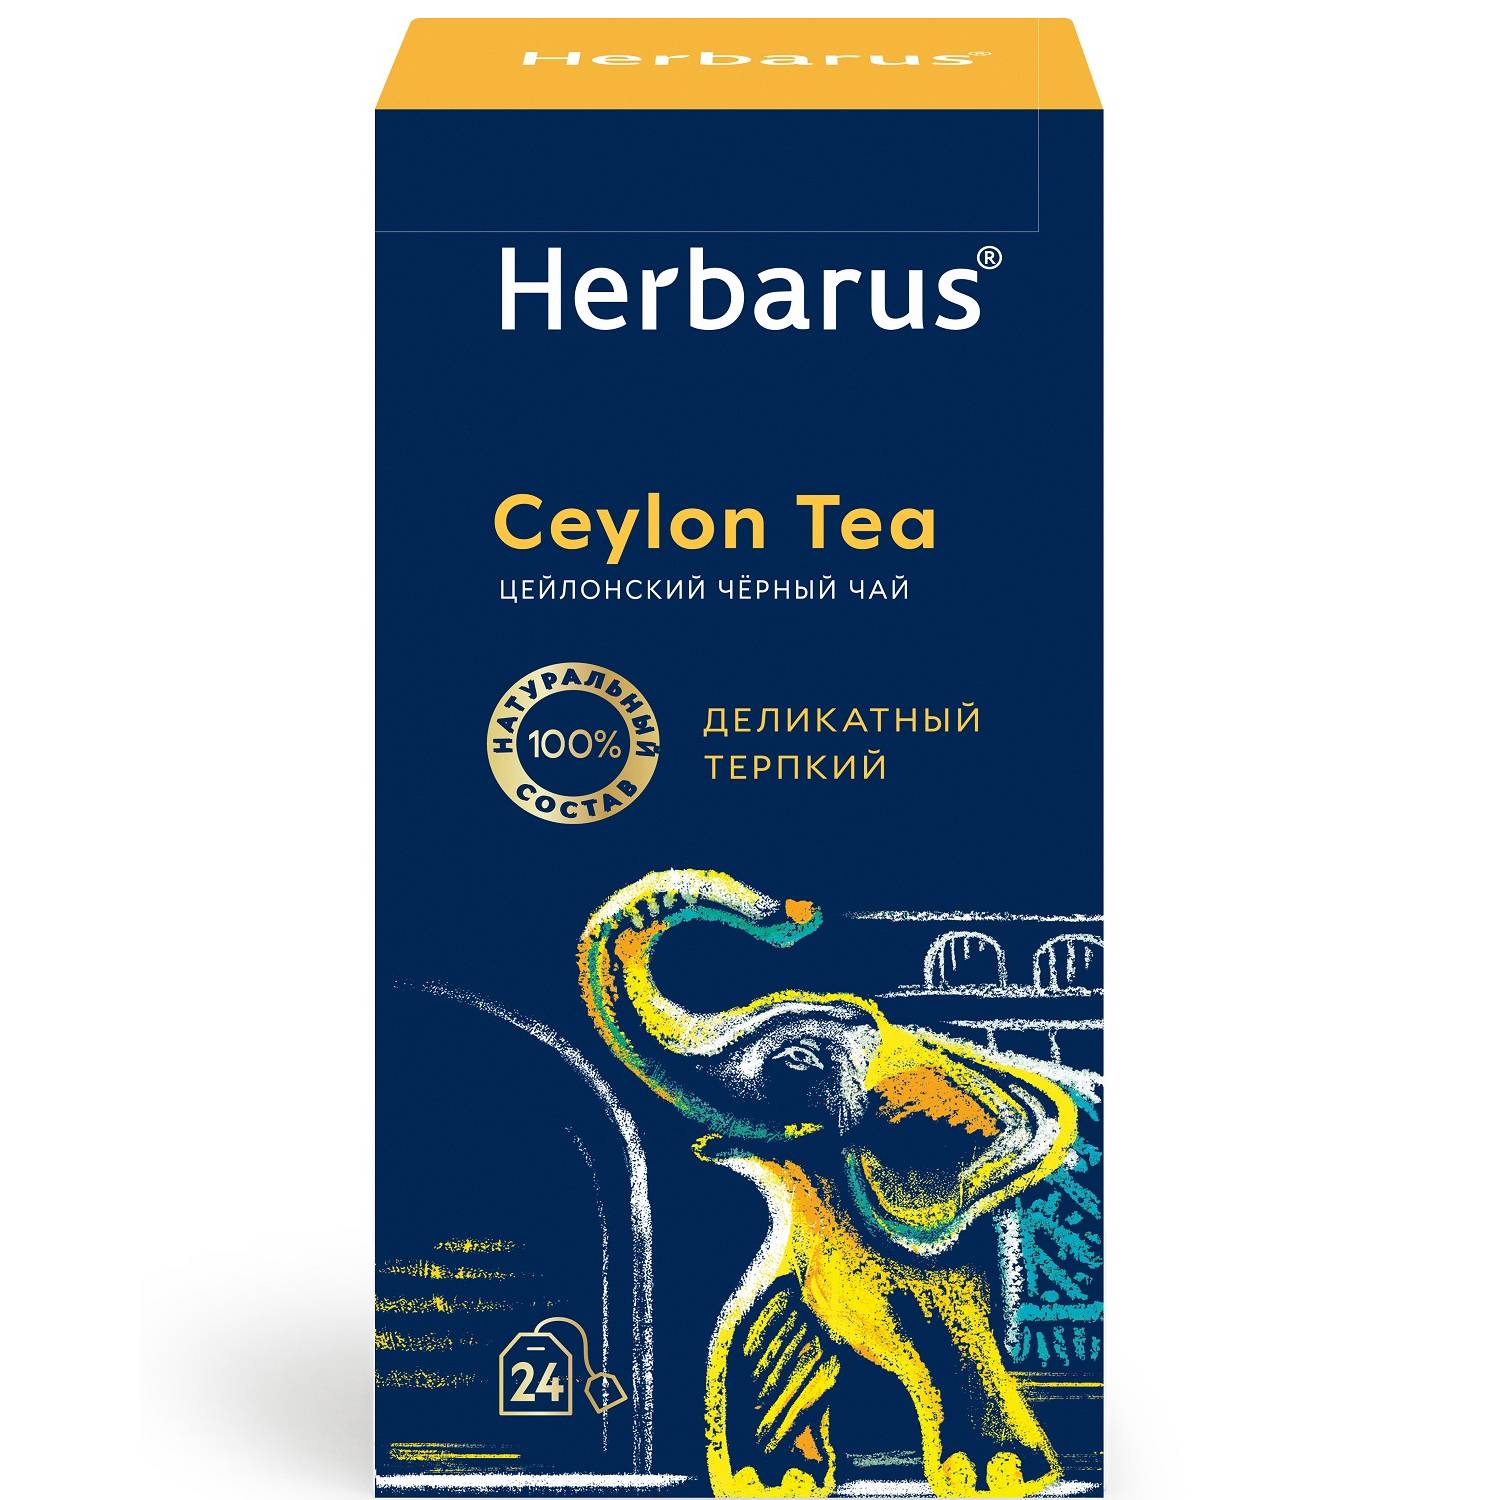 Herbarus Цейлонский черный чай Ceylon Tea, 24 пакетика х 2 г (Herbarus, Классический чай) herbarus чай улун с добавками нежный гармоничный 24 х 2 г herbarus чай с добавками